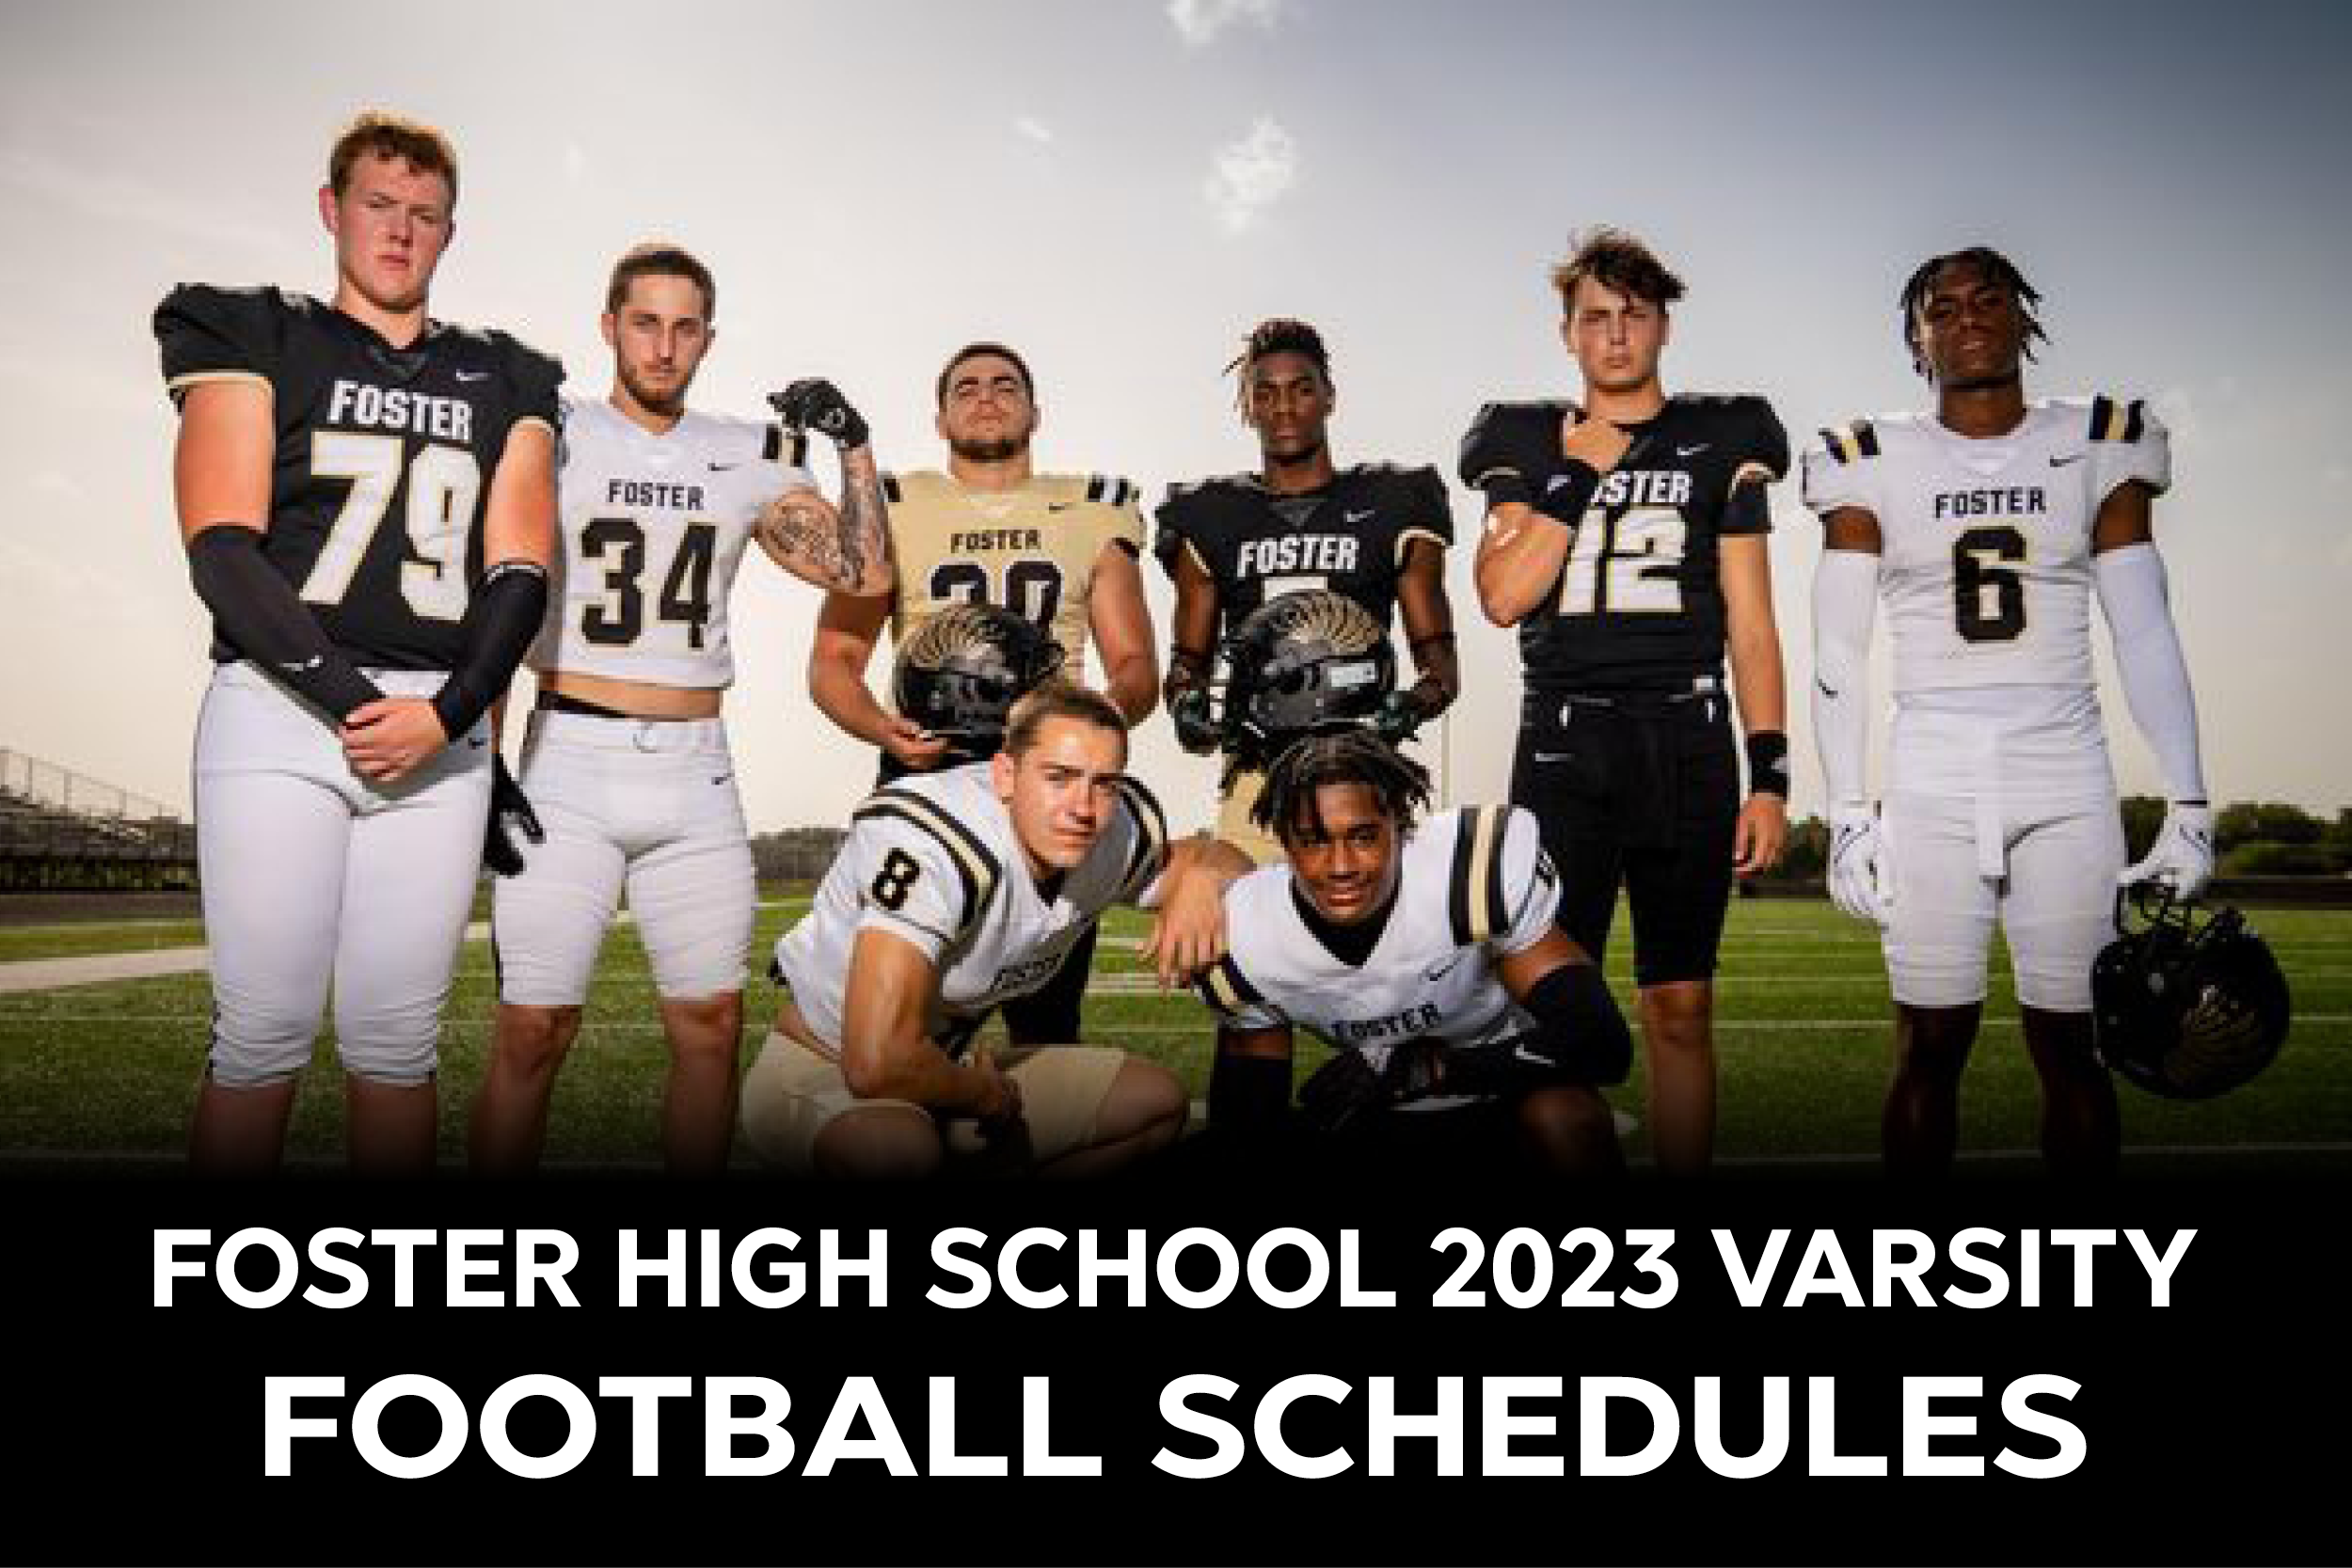 Foster High School 2023 Varsity Football Schedule